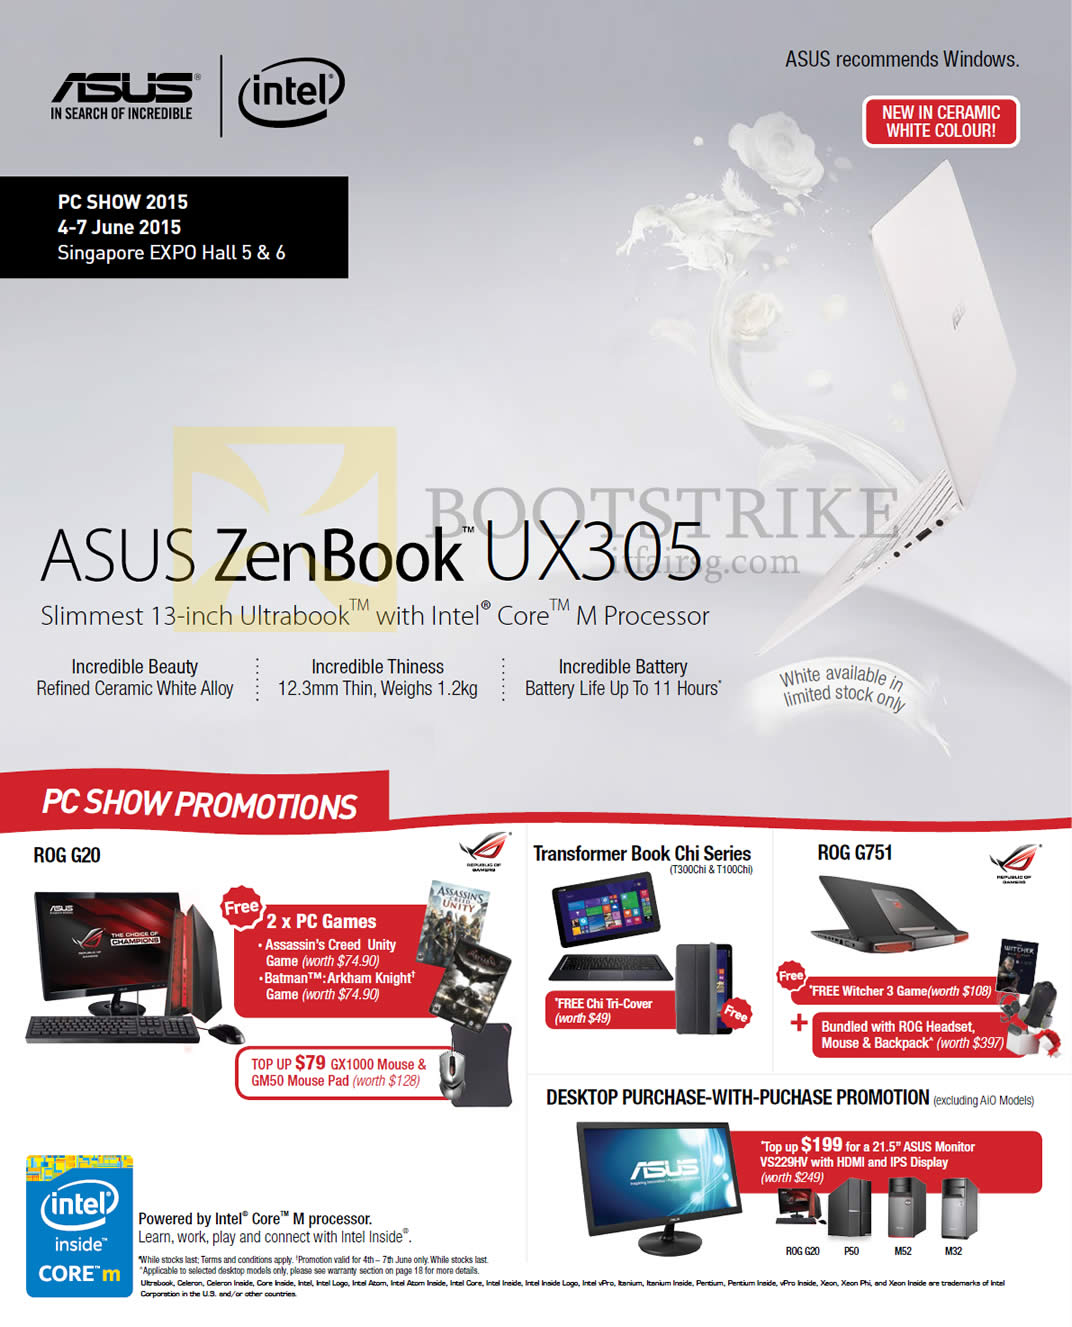 PC SHOW 2015 price list image brochure of ASUS Notebooks Highlights ZenBook UX305, ROG G20, Transformer Chi Series, ROG G751, Desktop PWP